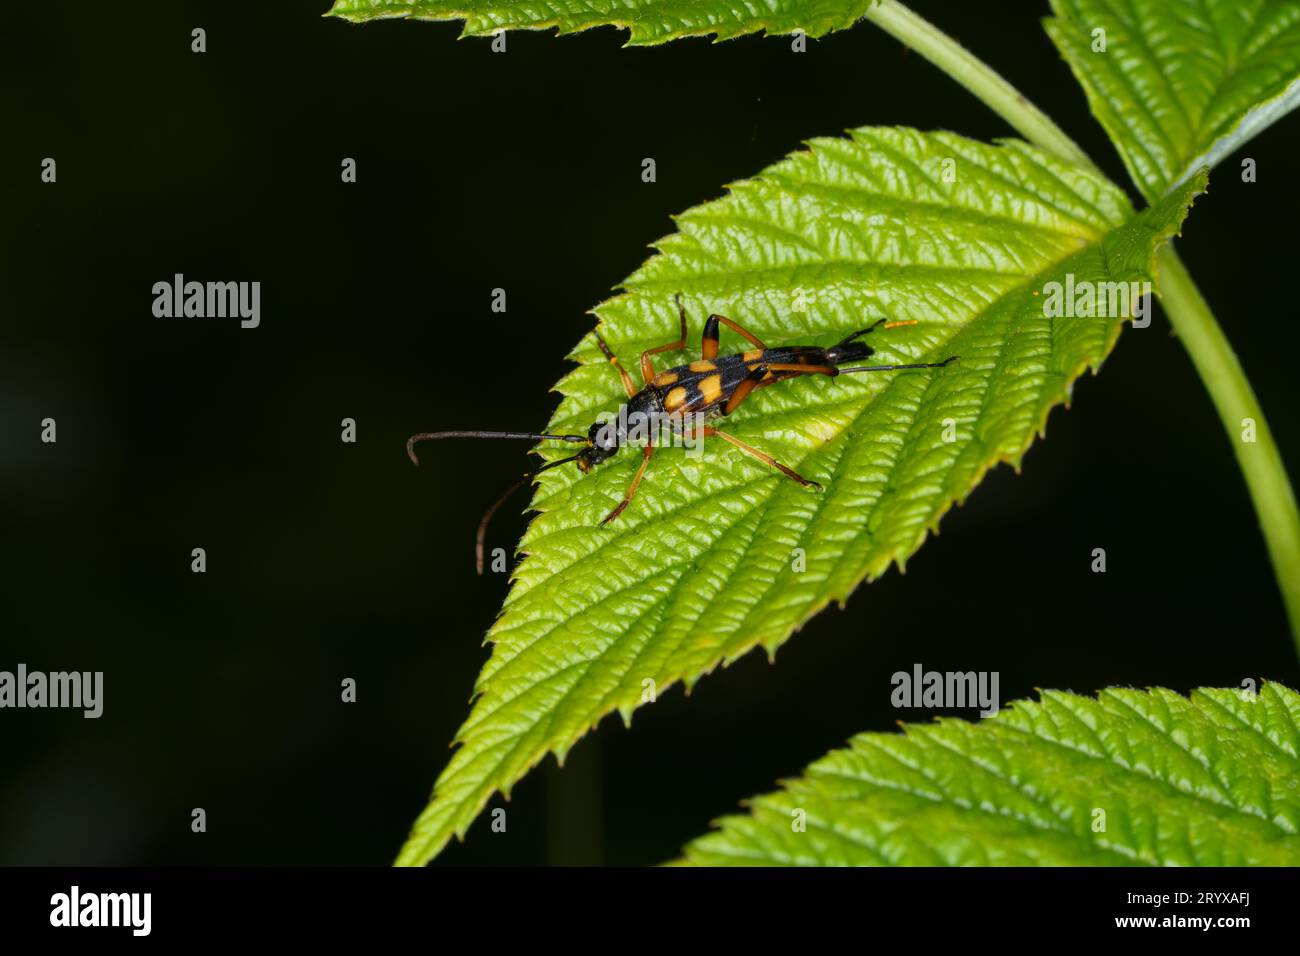 Strangalia attenuata Familie Cerambycidae Gattung Strangalia wilde Natur Insektenfotografie, Bild, Tapete Stockfoto